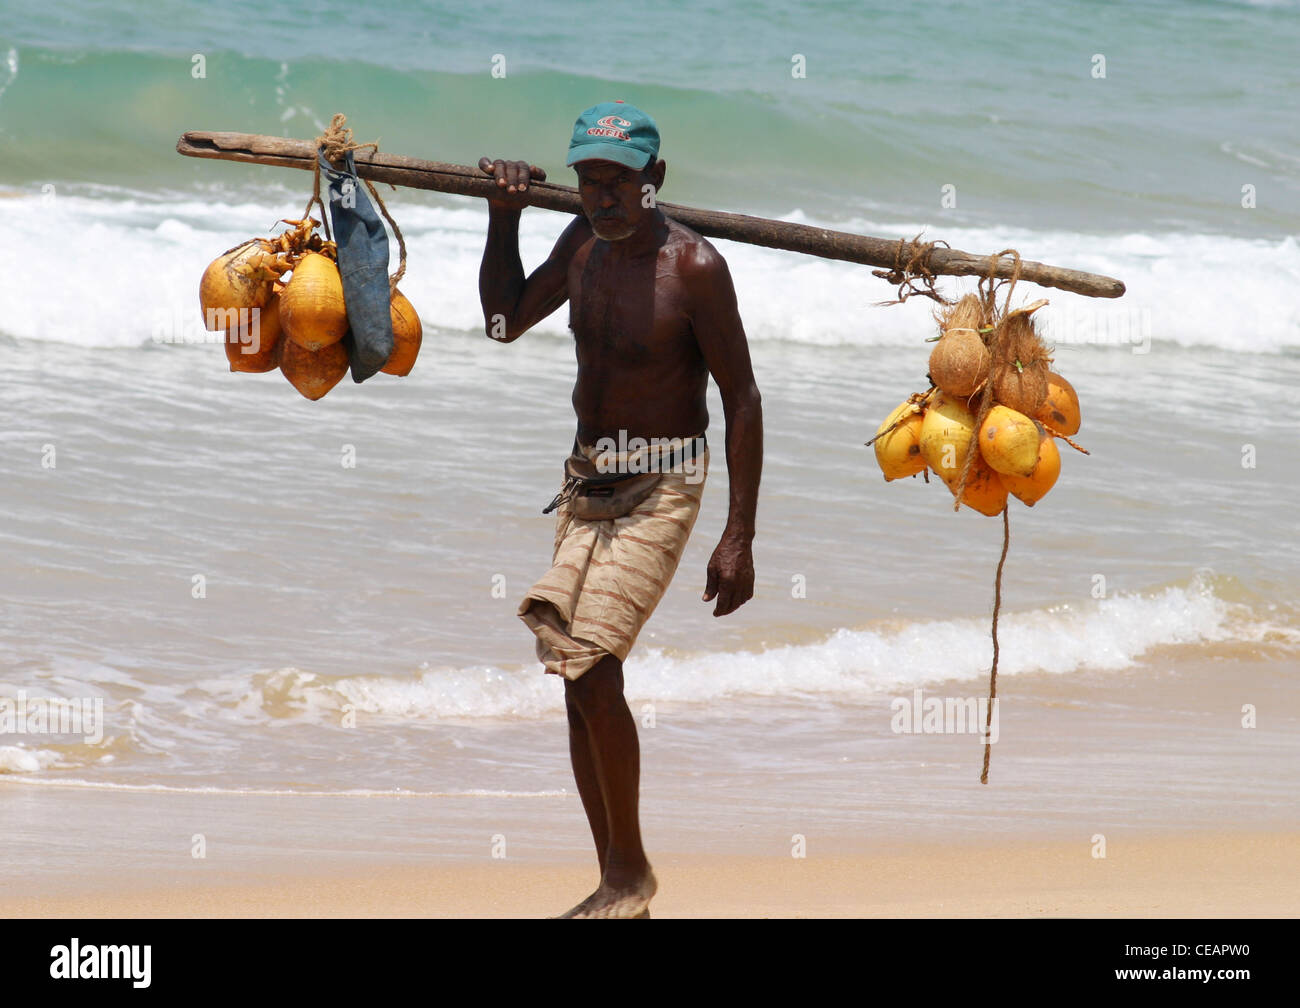 a-coconut-seller-walking-along-the-beach-carrying-coconuts-hikkaduwa-CEAPW0.jpg